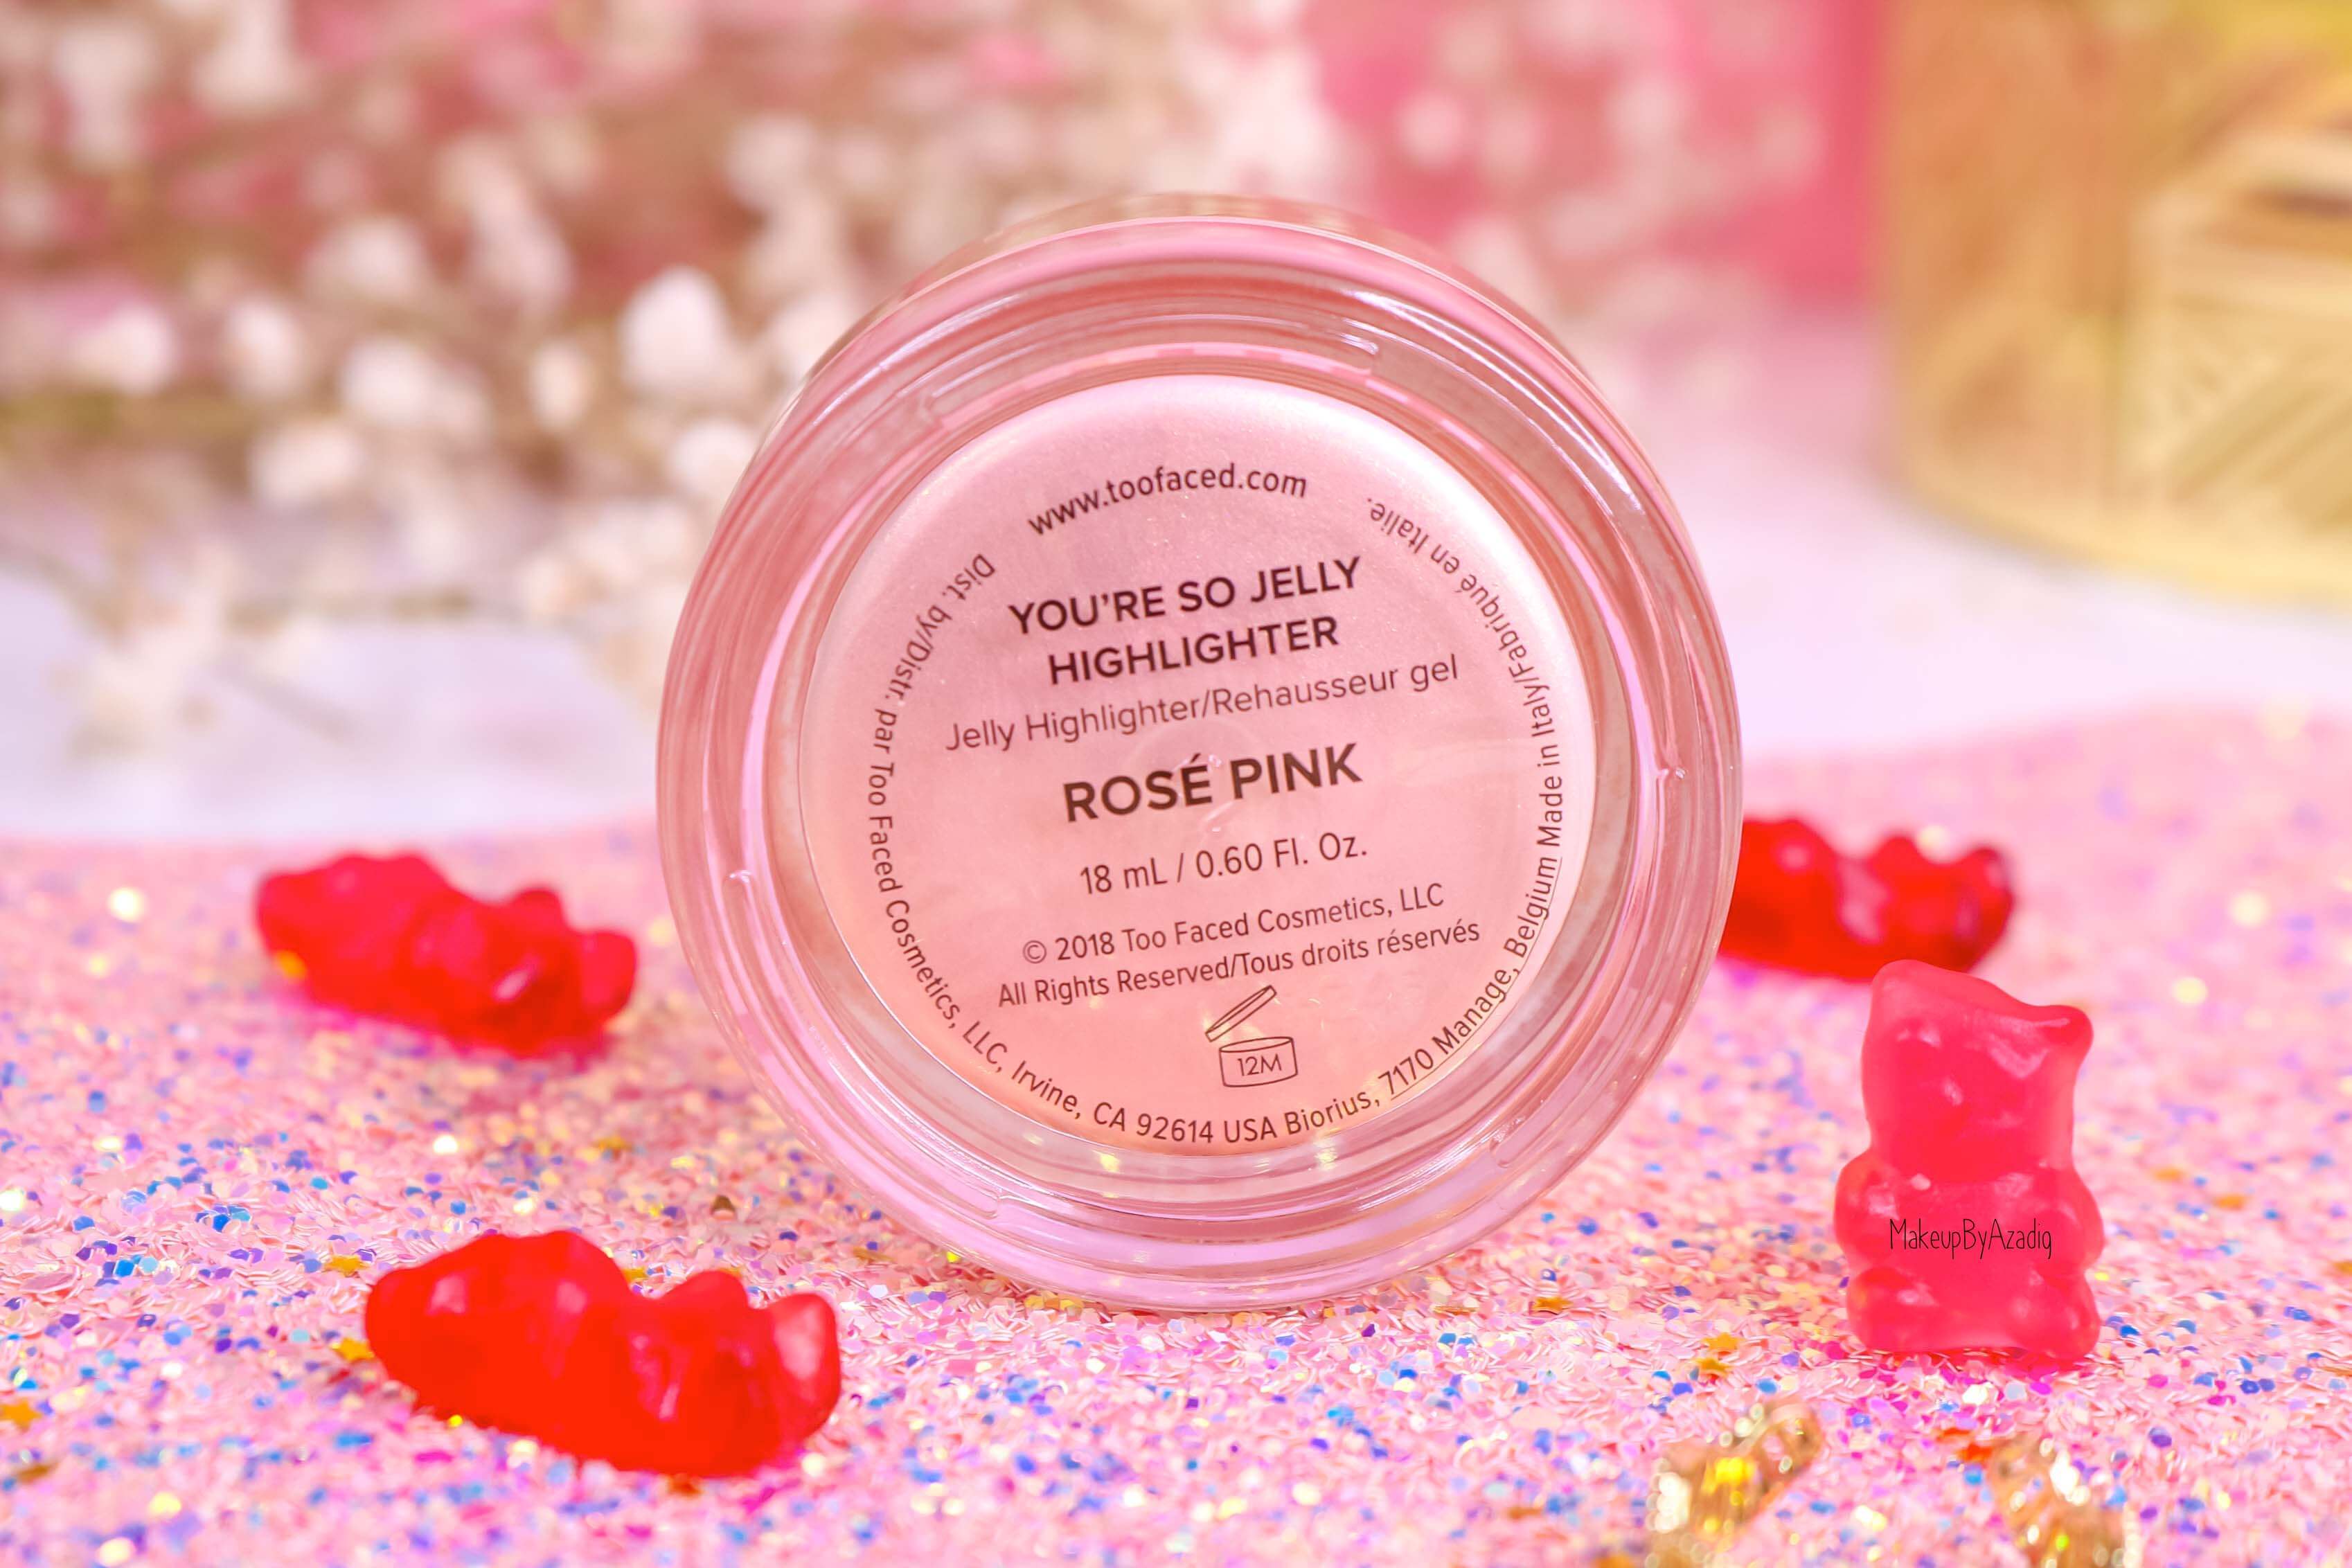 revue-highlighter-jelly-gel-rose-pink-too-faced-texture-cute-avis-prix-swatch-makeupbyazadig-sephora-france-rehausseur